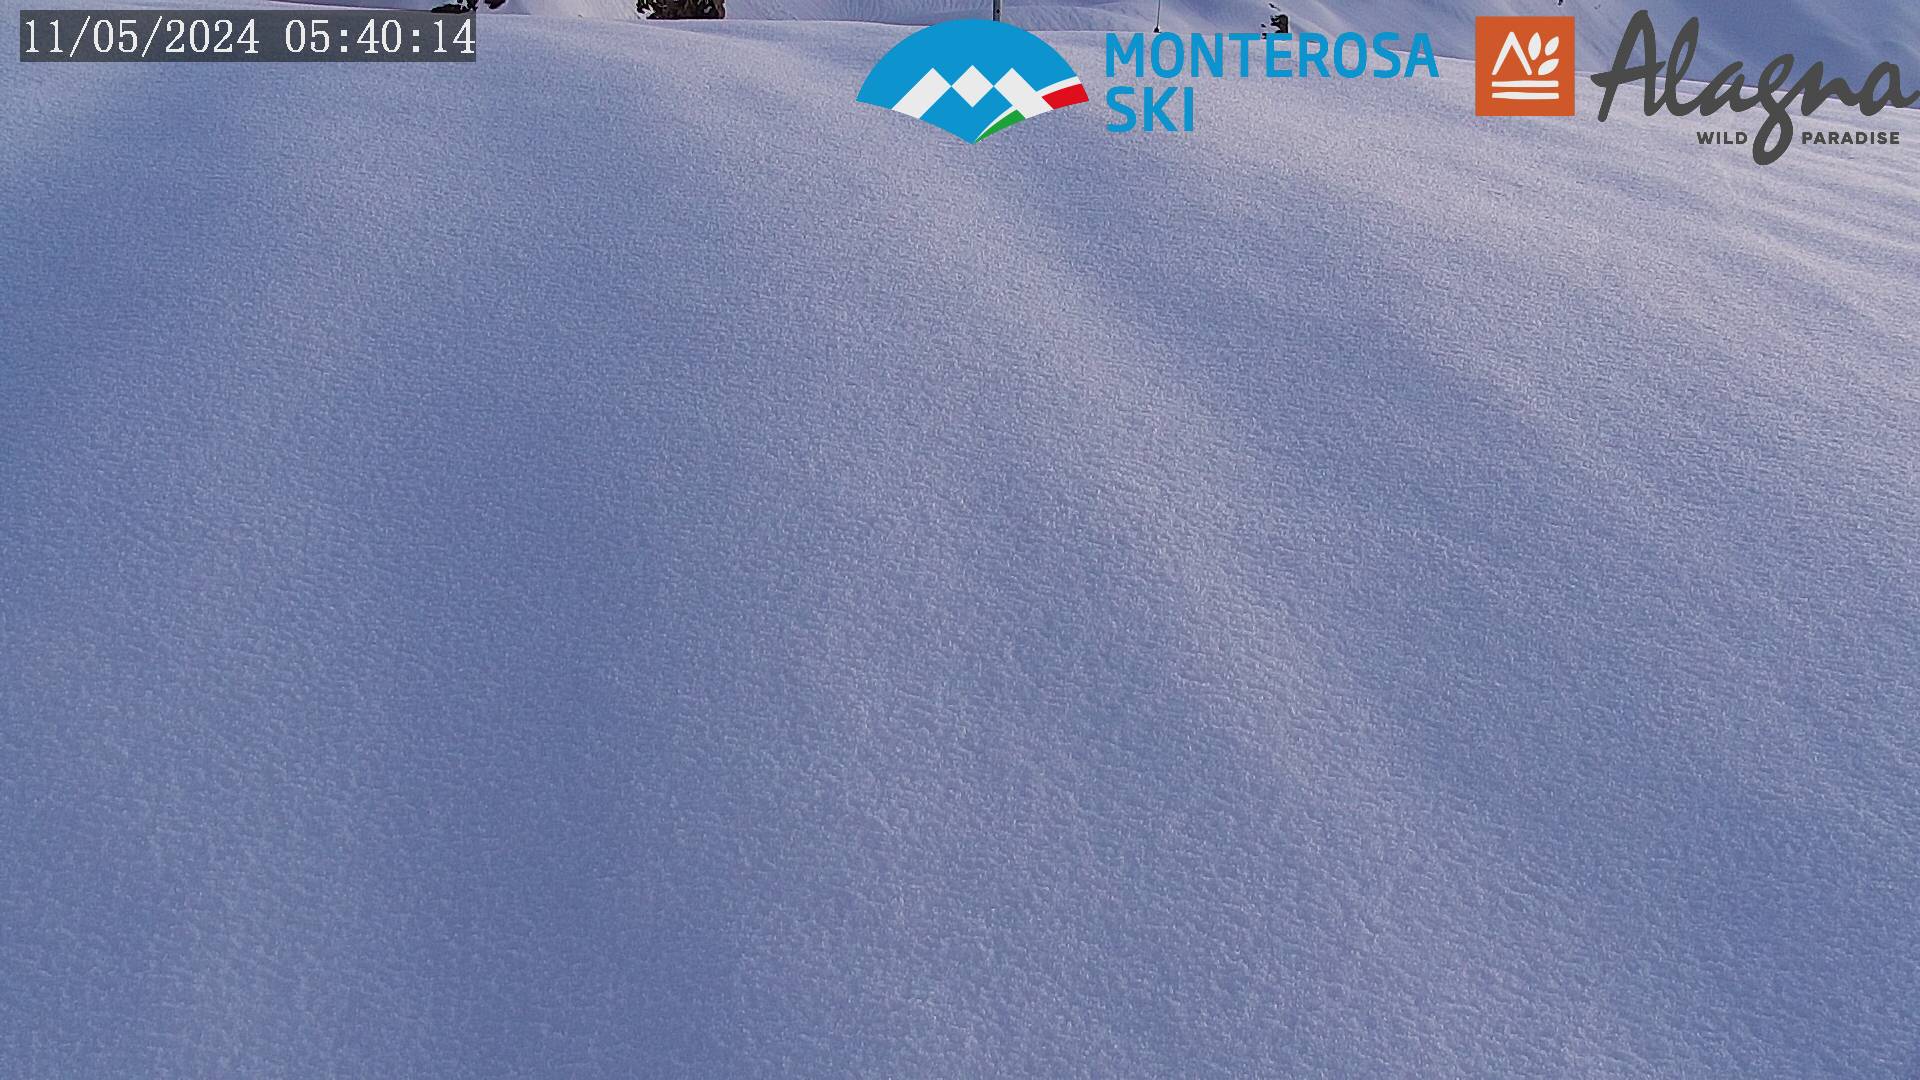 Monterosa-ski Alagna Valsesia - Altopiano di Cimalegna